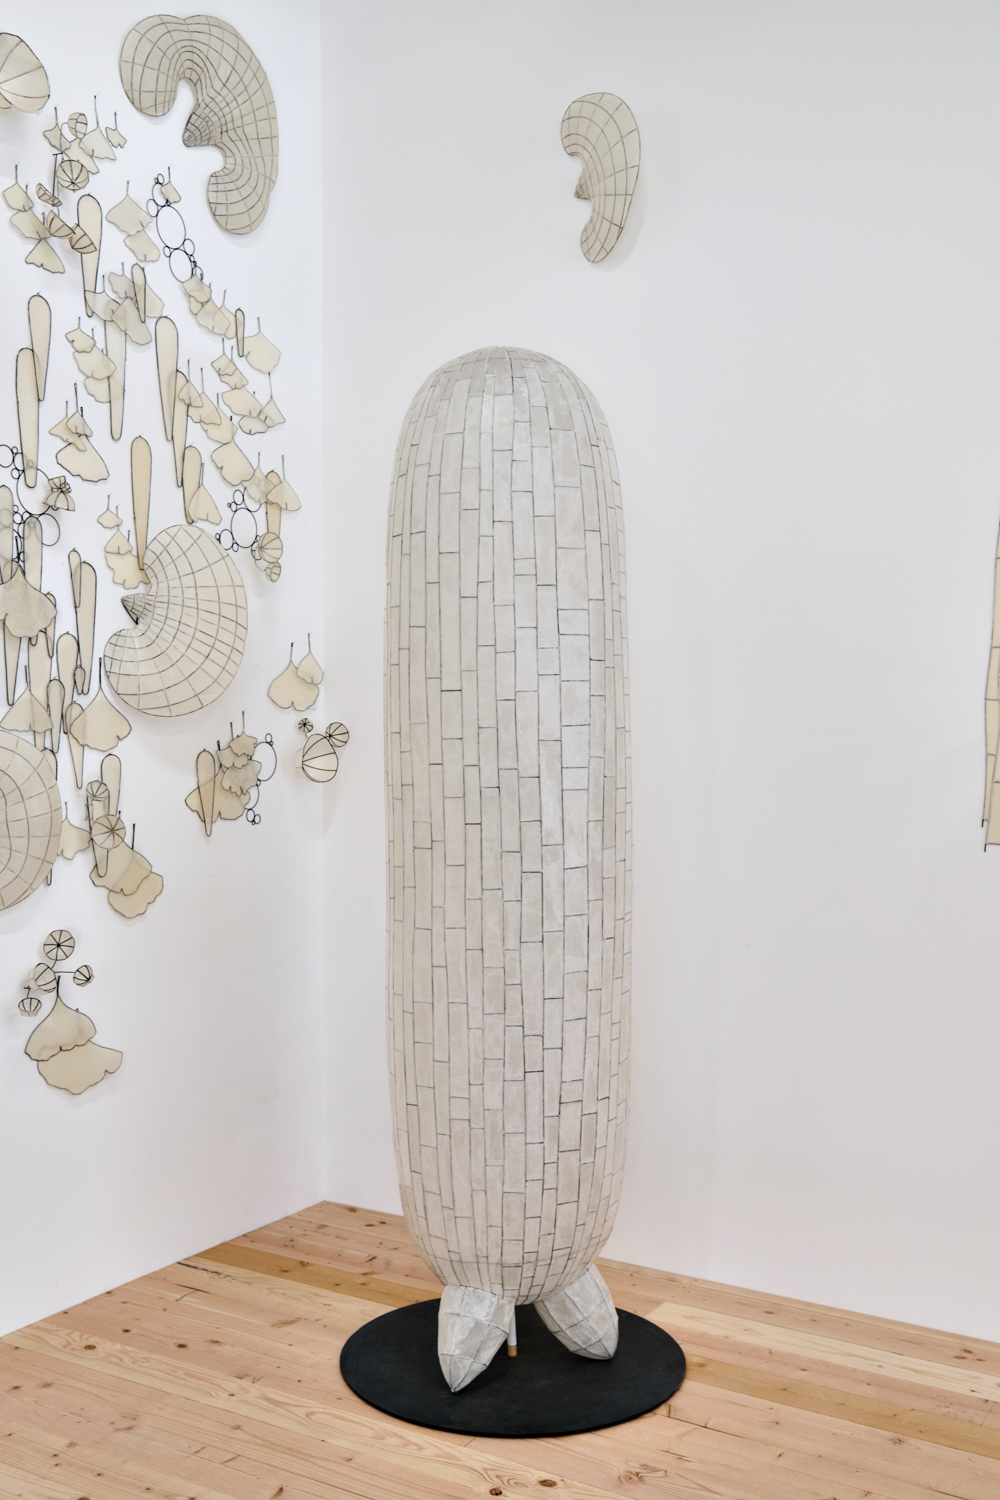 A large sculpture, Ancestor 1, towers in Nancy Mintz’s art studio